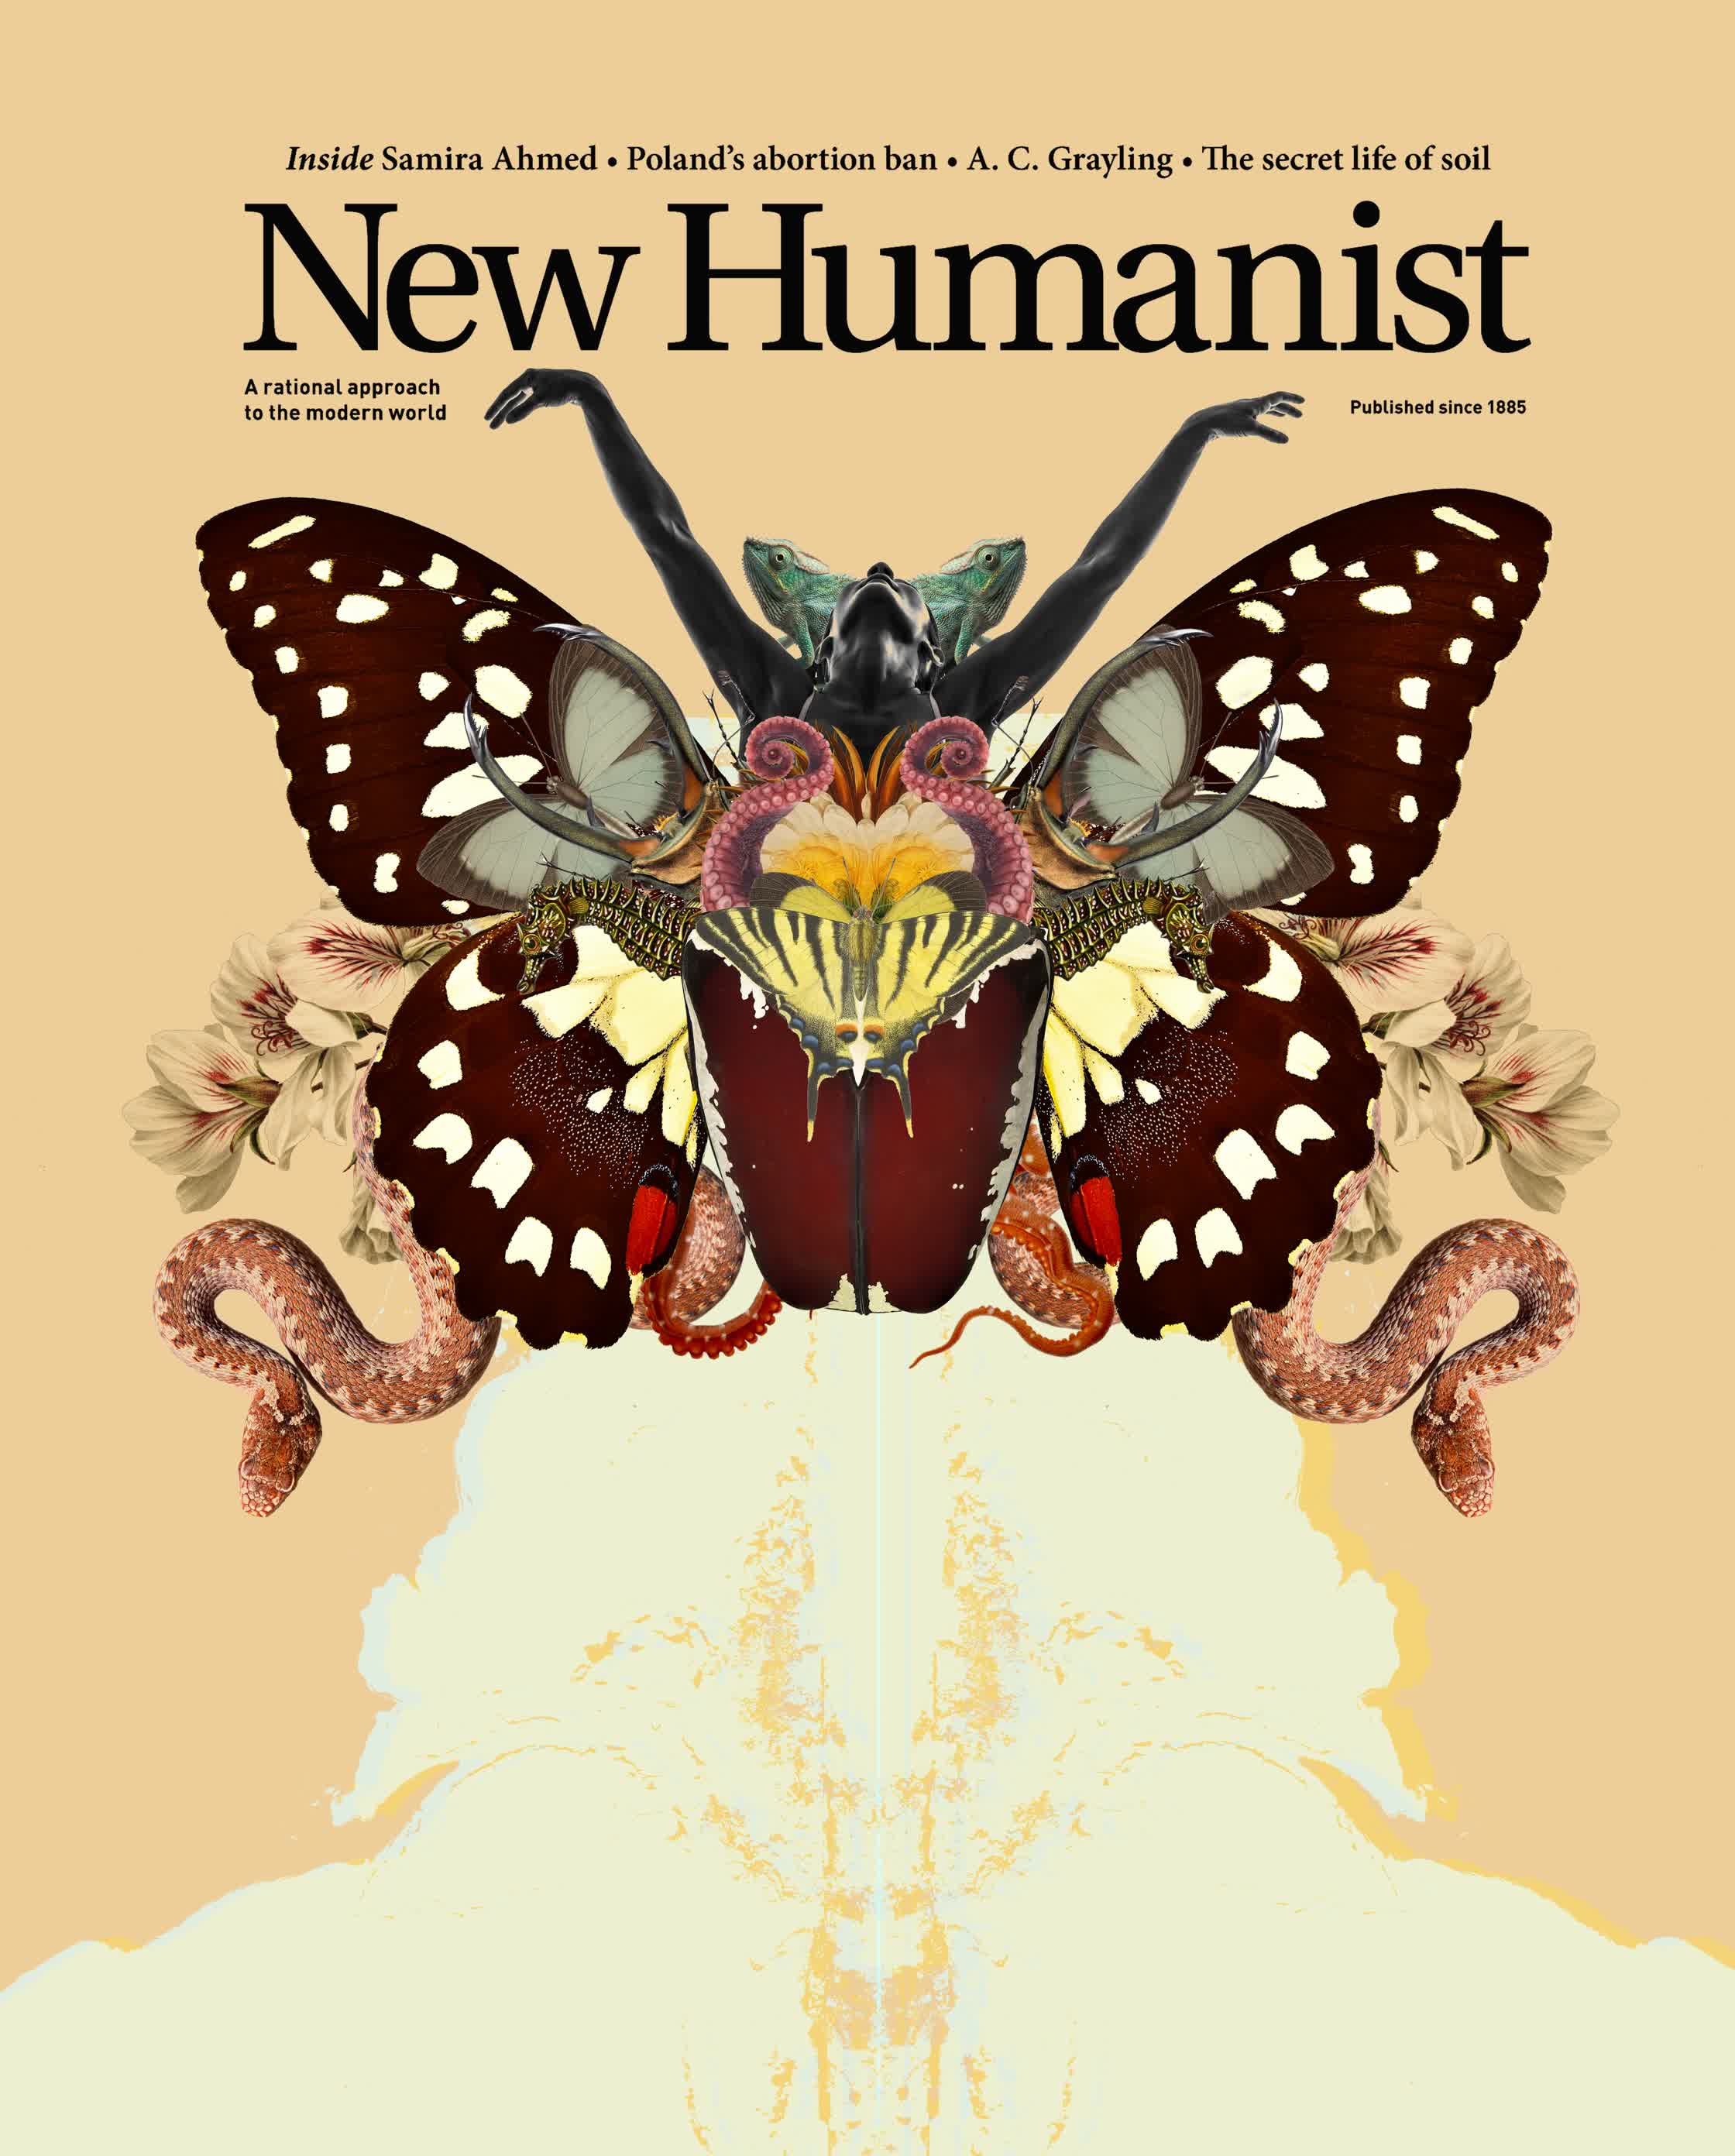 NEW_HUMANIST_WINTER_2v1 copy.jpg